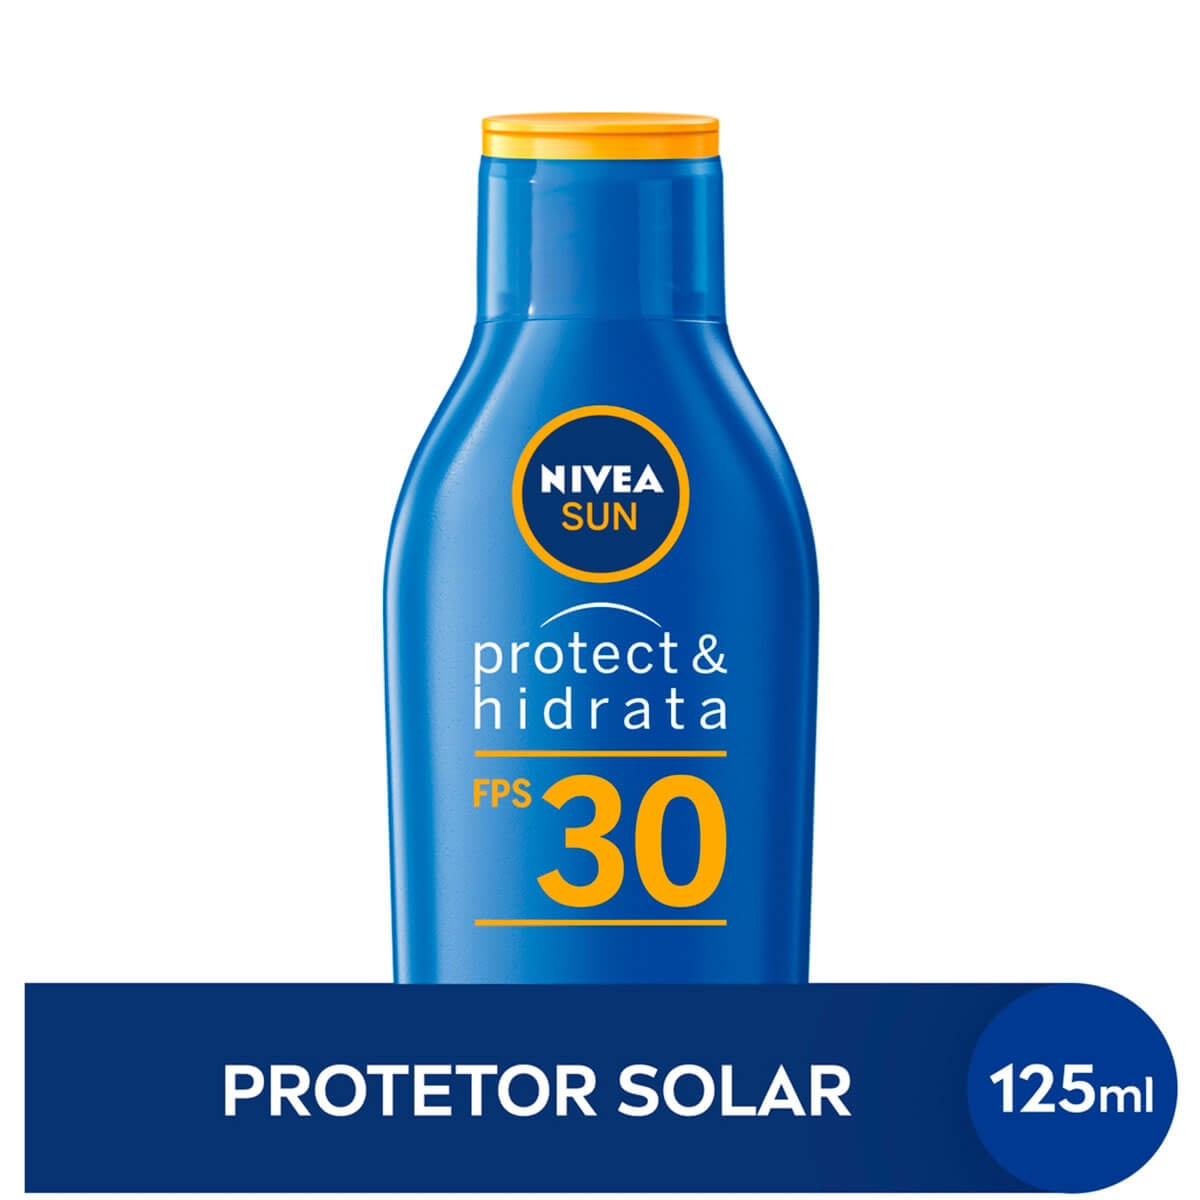 Protetor Solar Nivea Sun Protect & Hidrata FPS 30 com 125ml 125ml